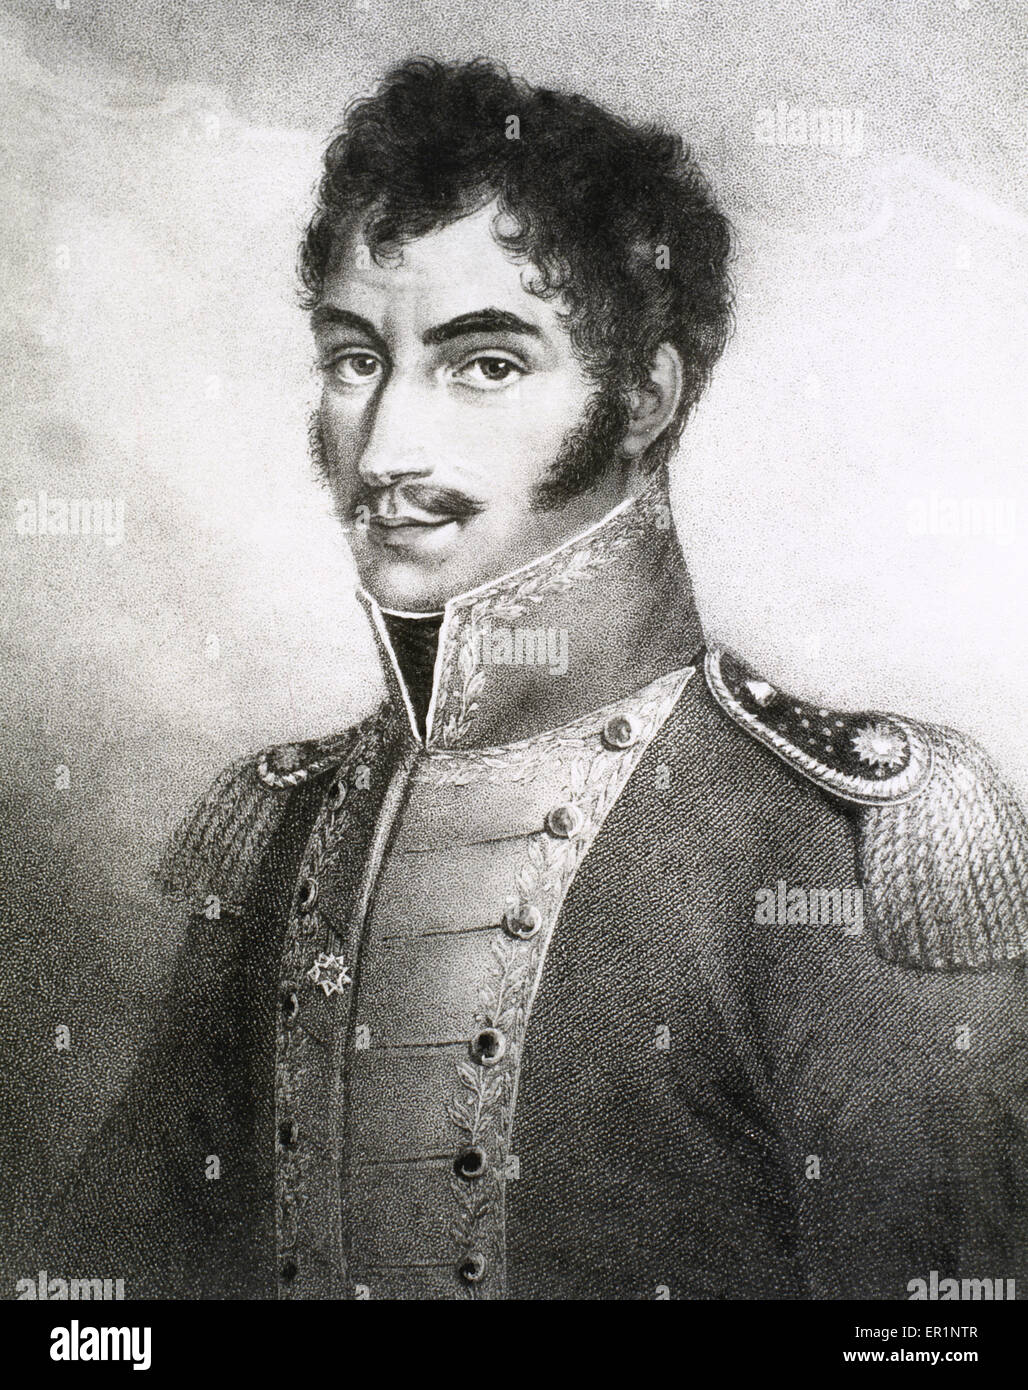 Simon Bolivar (1793-1830). Venezuelan military and statesman called The Liberator. Engraving of the time. Stock Photo